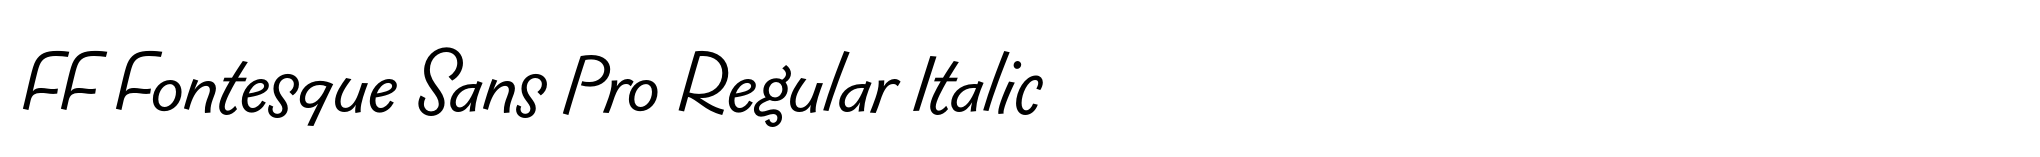 FF Fontesque Sans Pro Regular Italic image